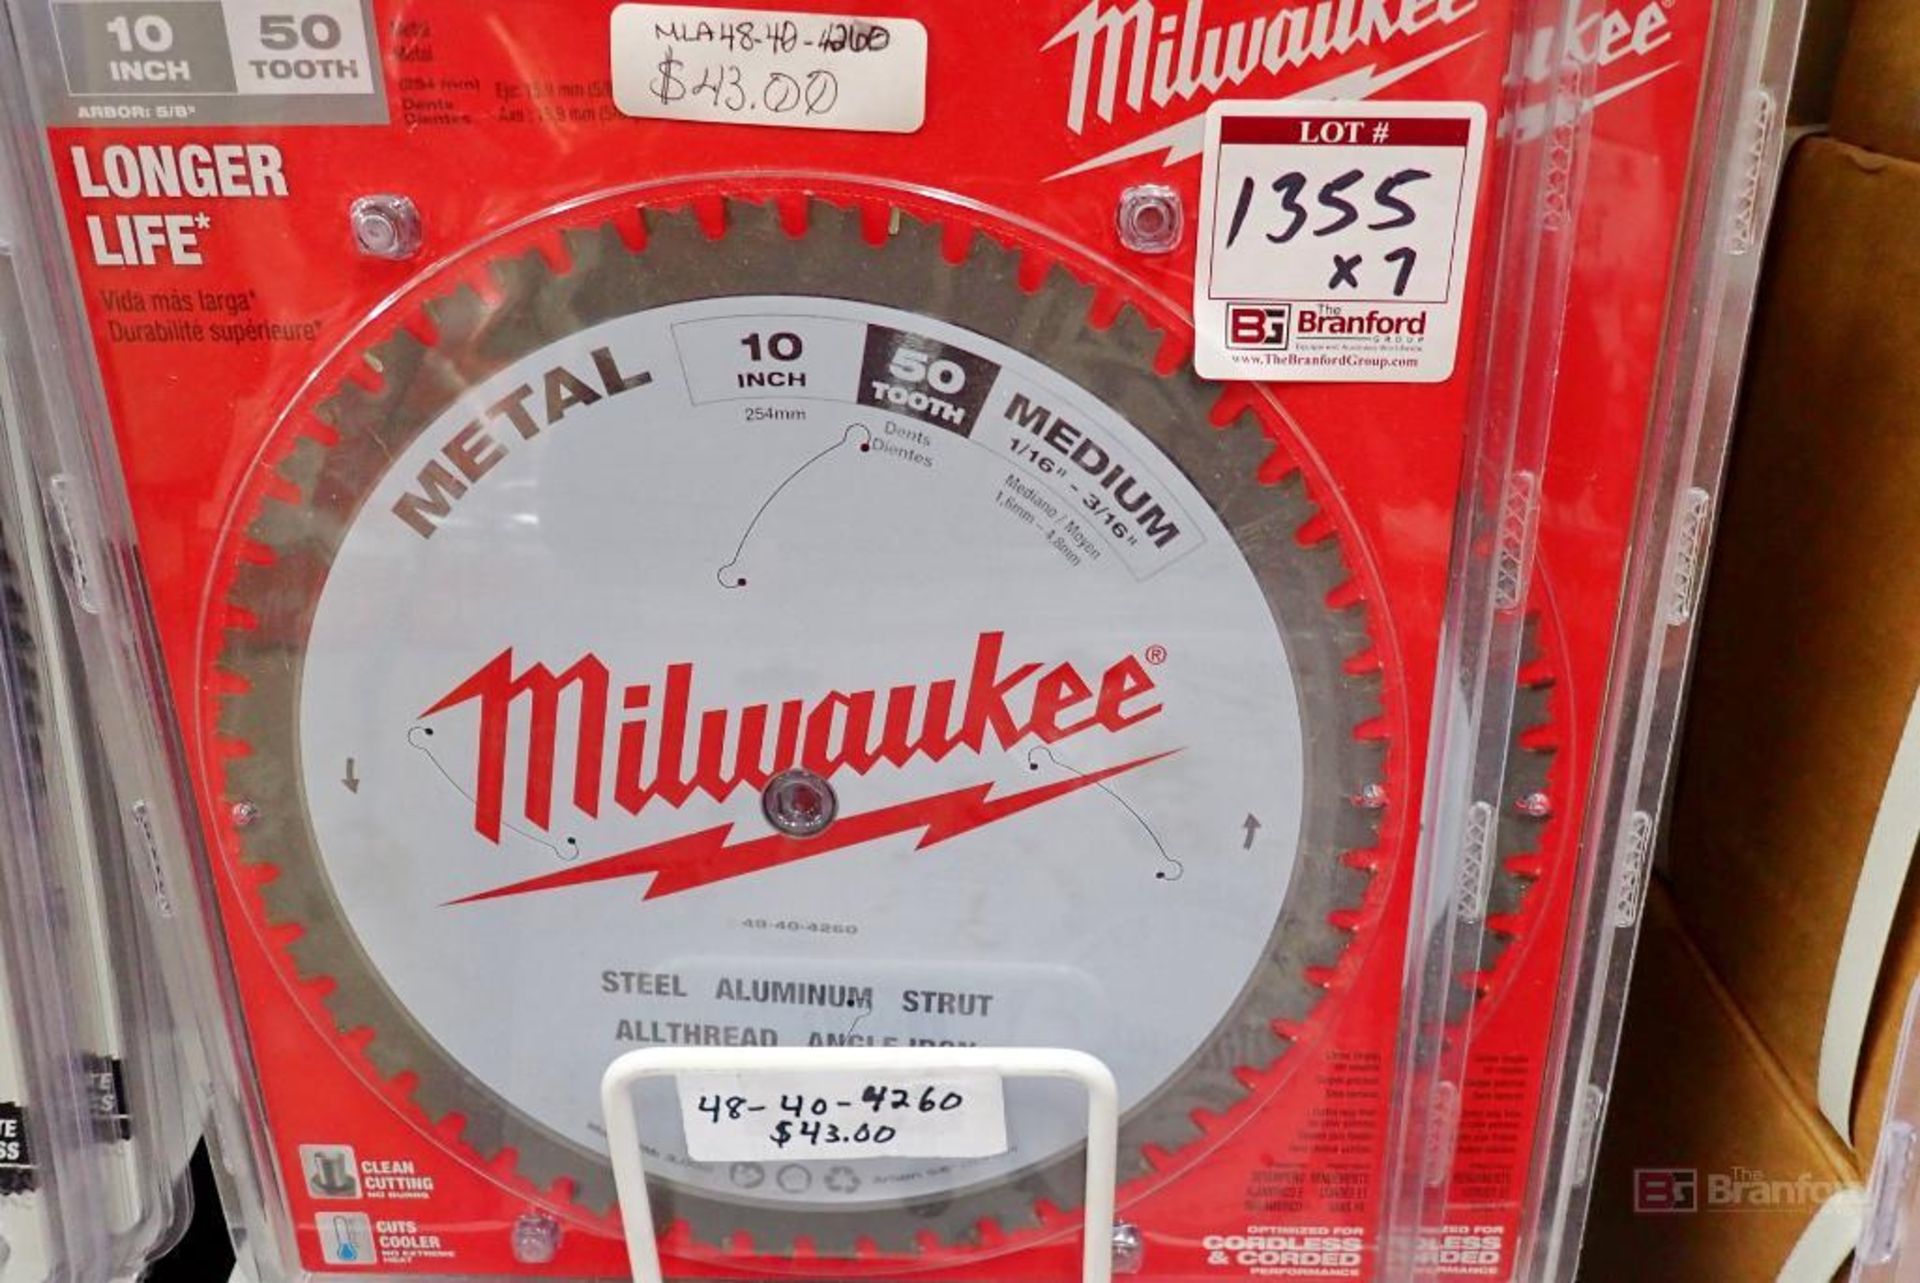 (7) Milwaukee 48-40-4260 10" Metal Saw Blades